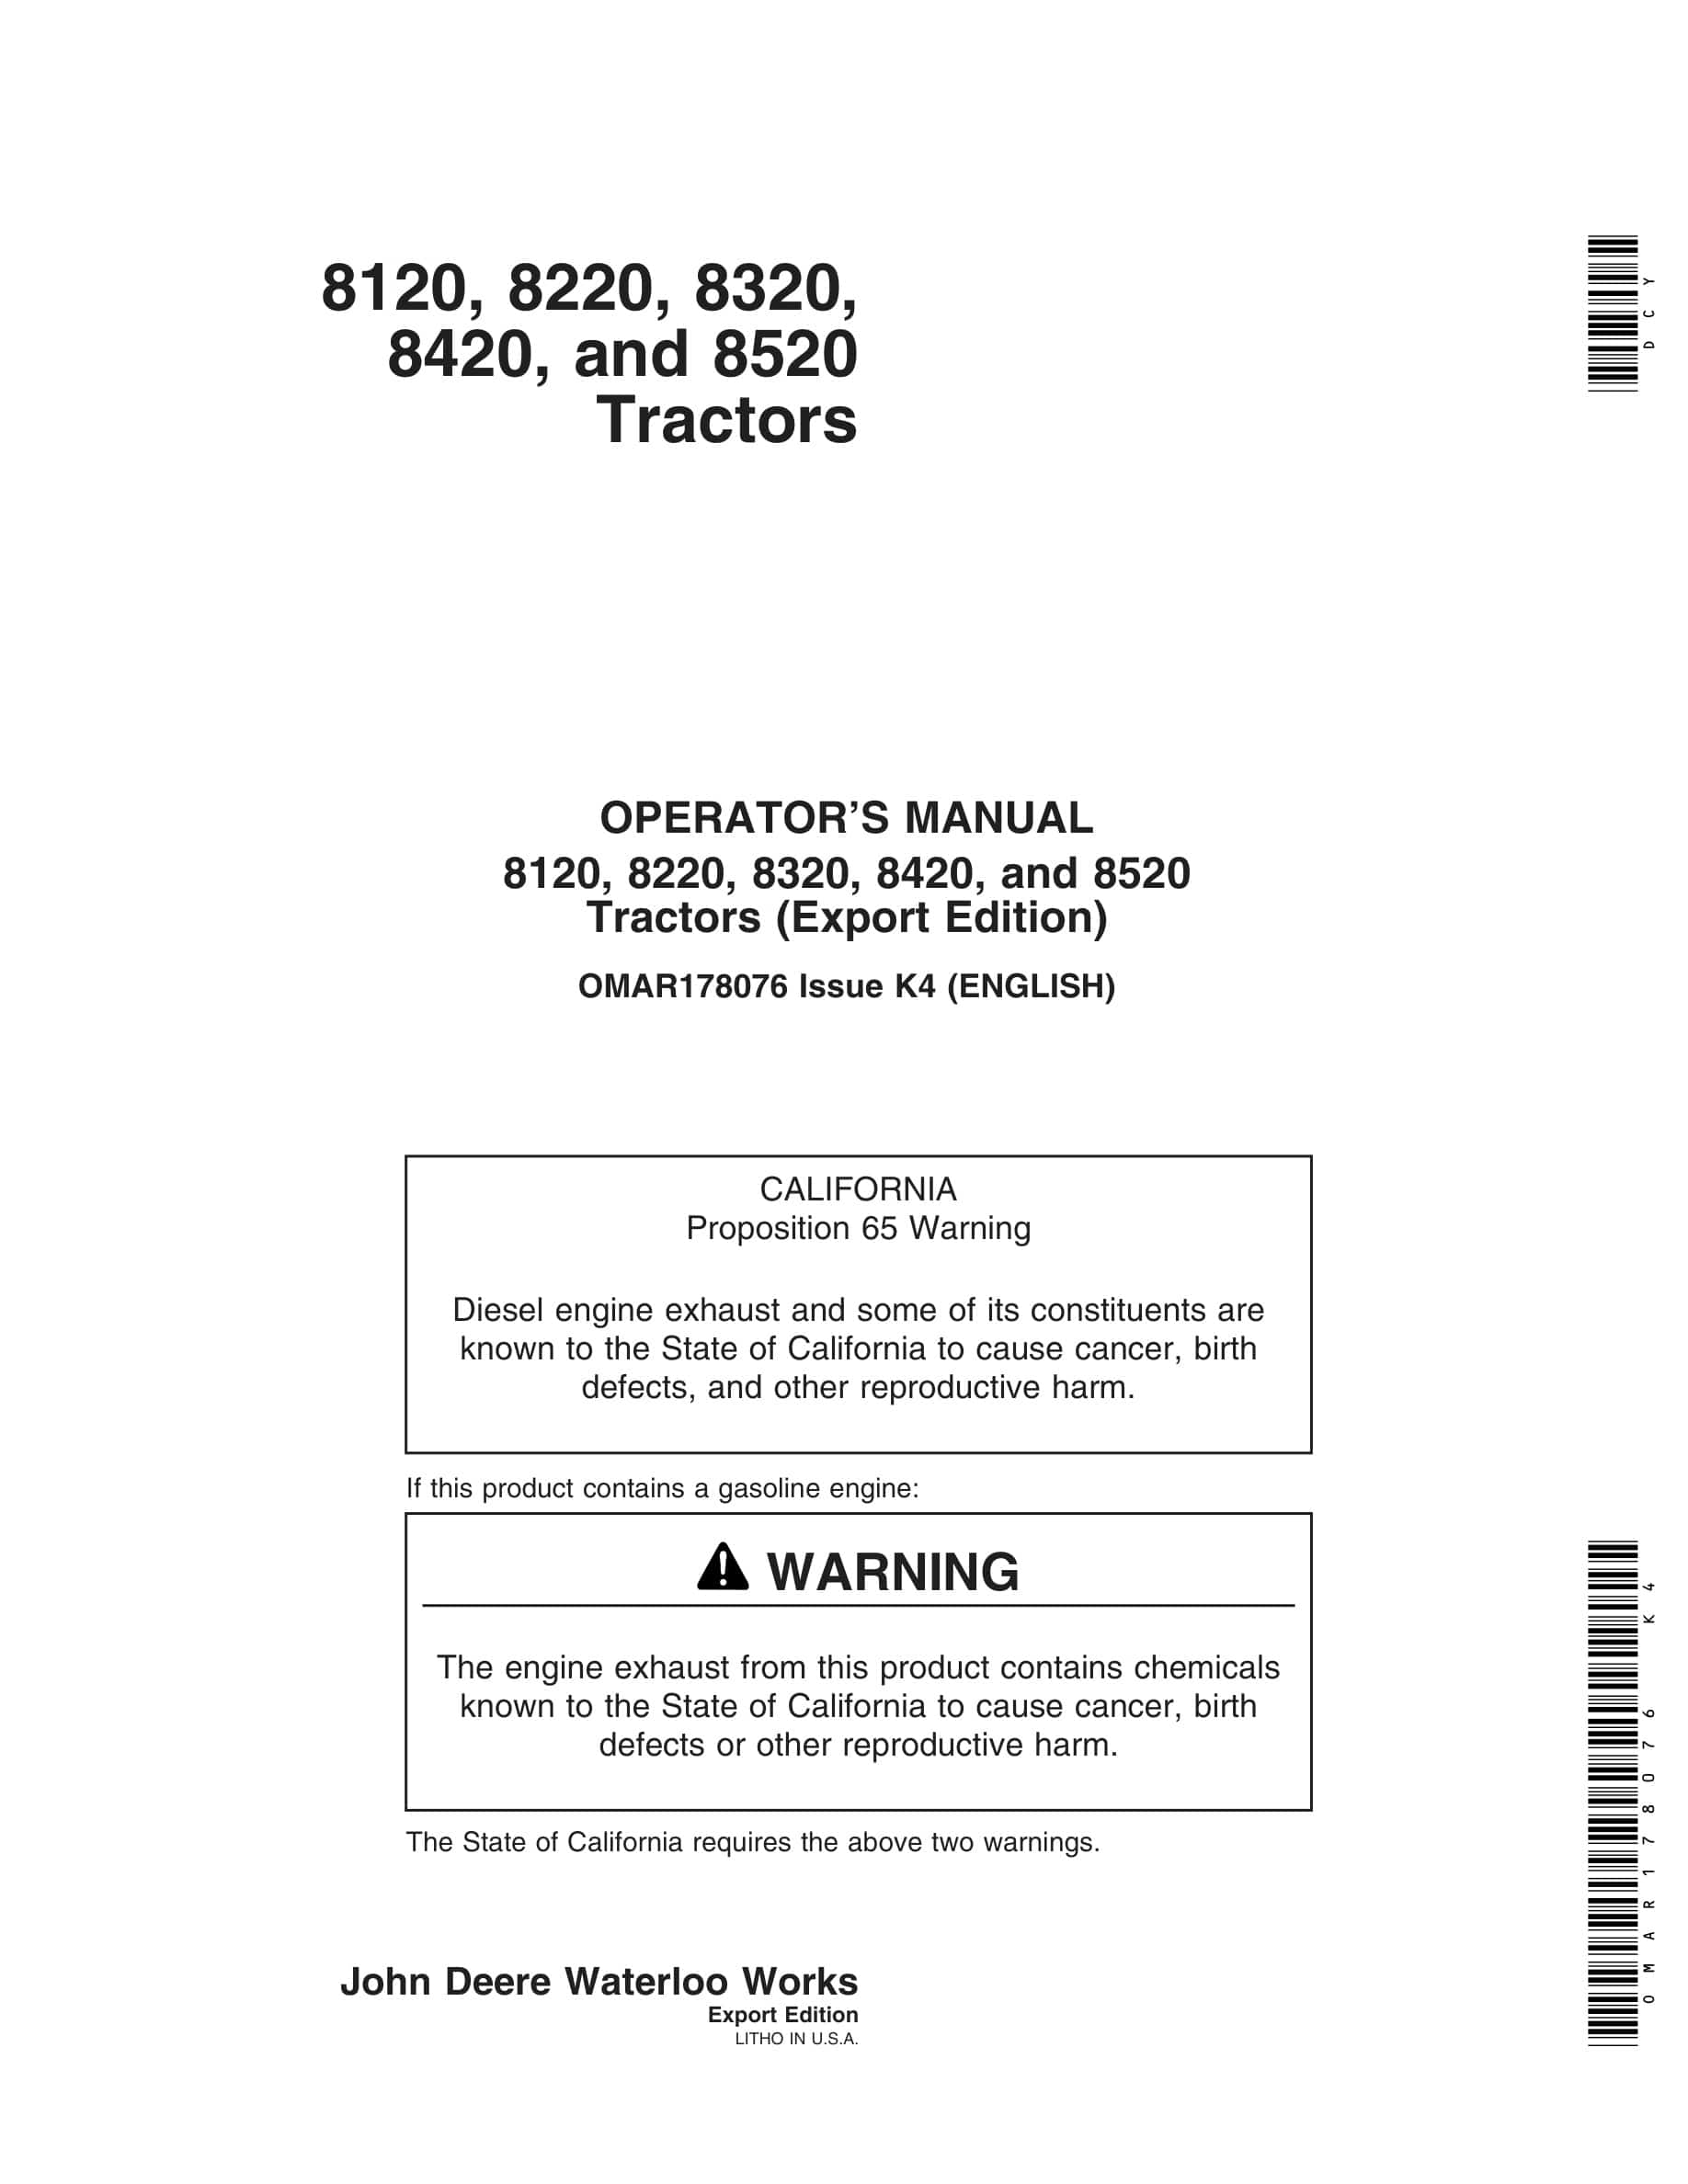 John Deere 8120, 8220, 8320, 8420, And 8520 Tractrors Operator Manual OMAR17807-1